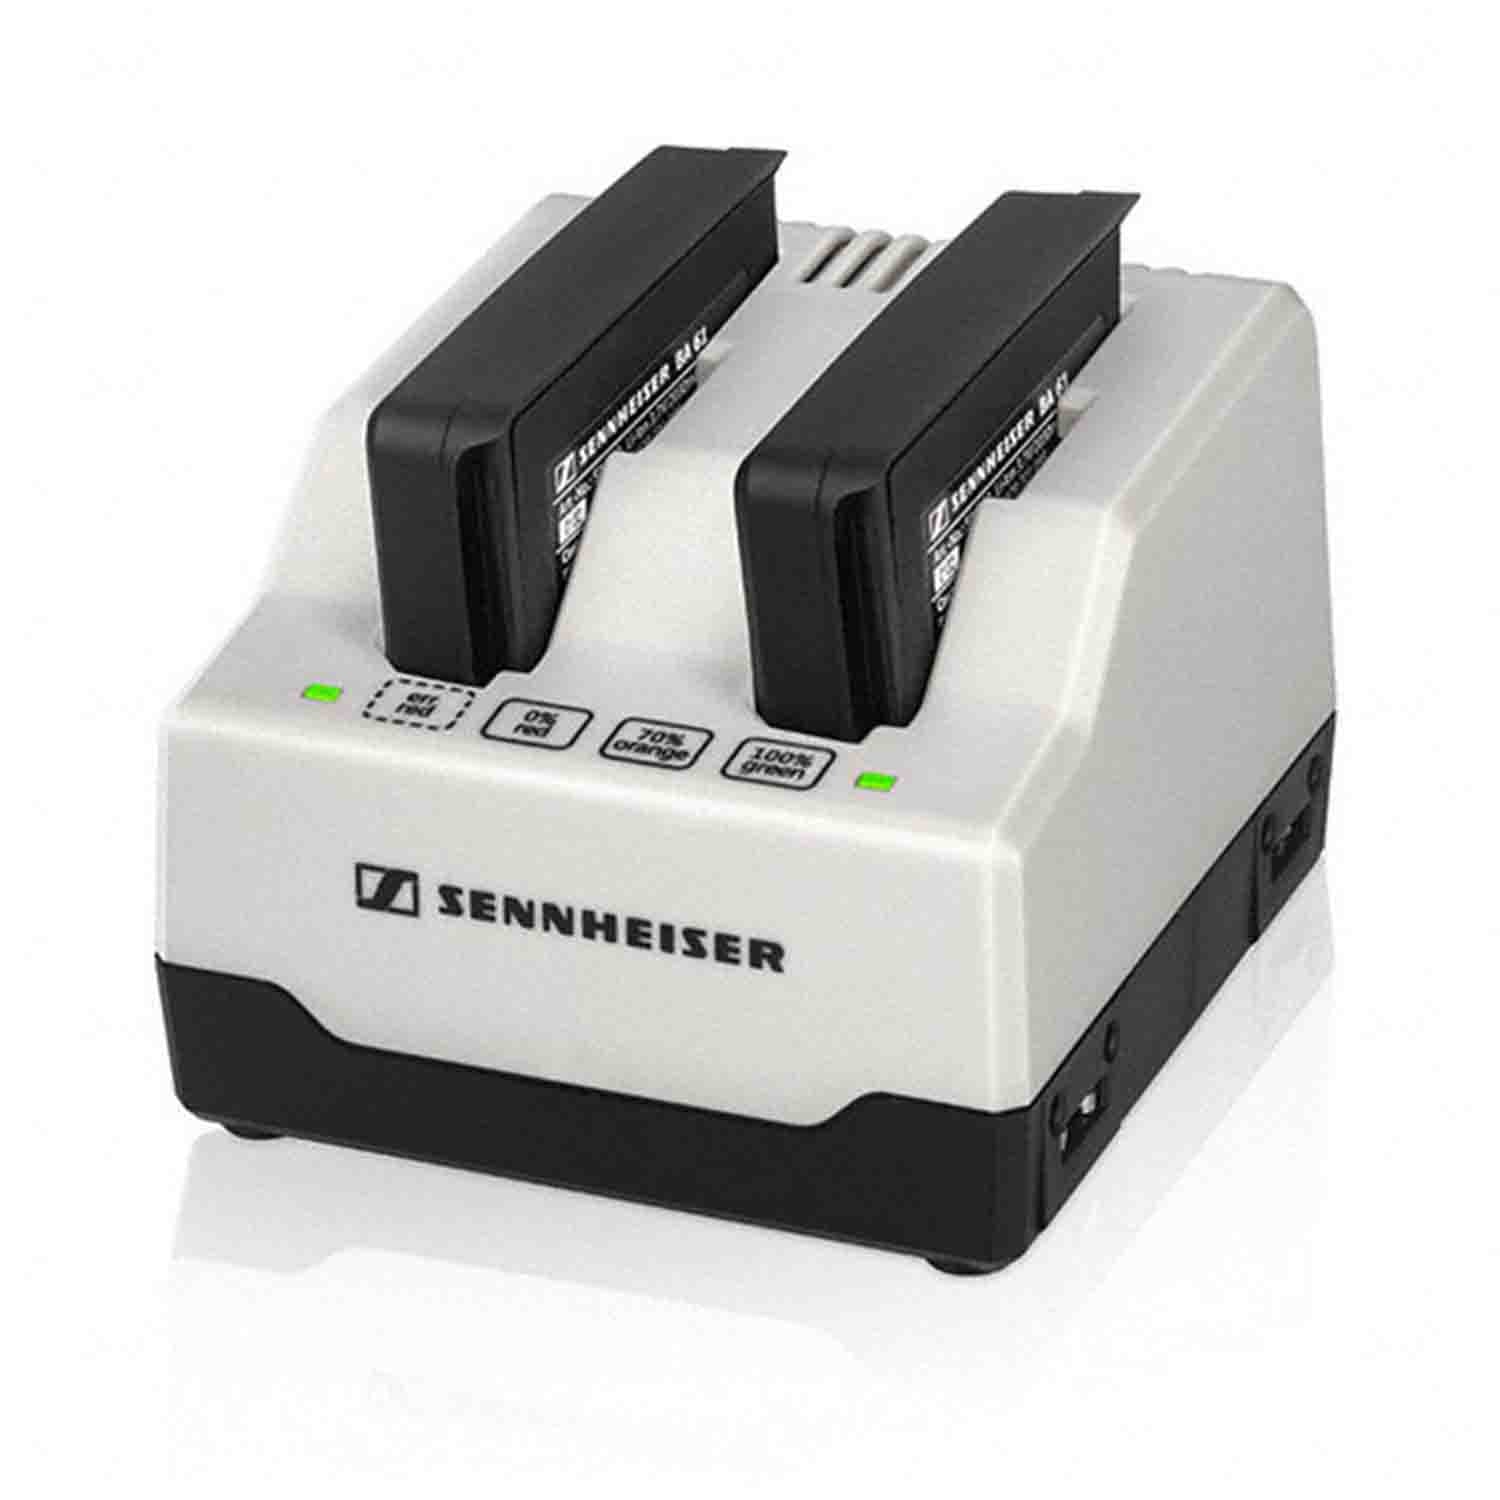 Sennheiser L 60 Charging Unit for BA 60 and BA 61 Transmitter Battery Packs - Hollywood DJ